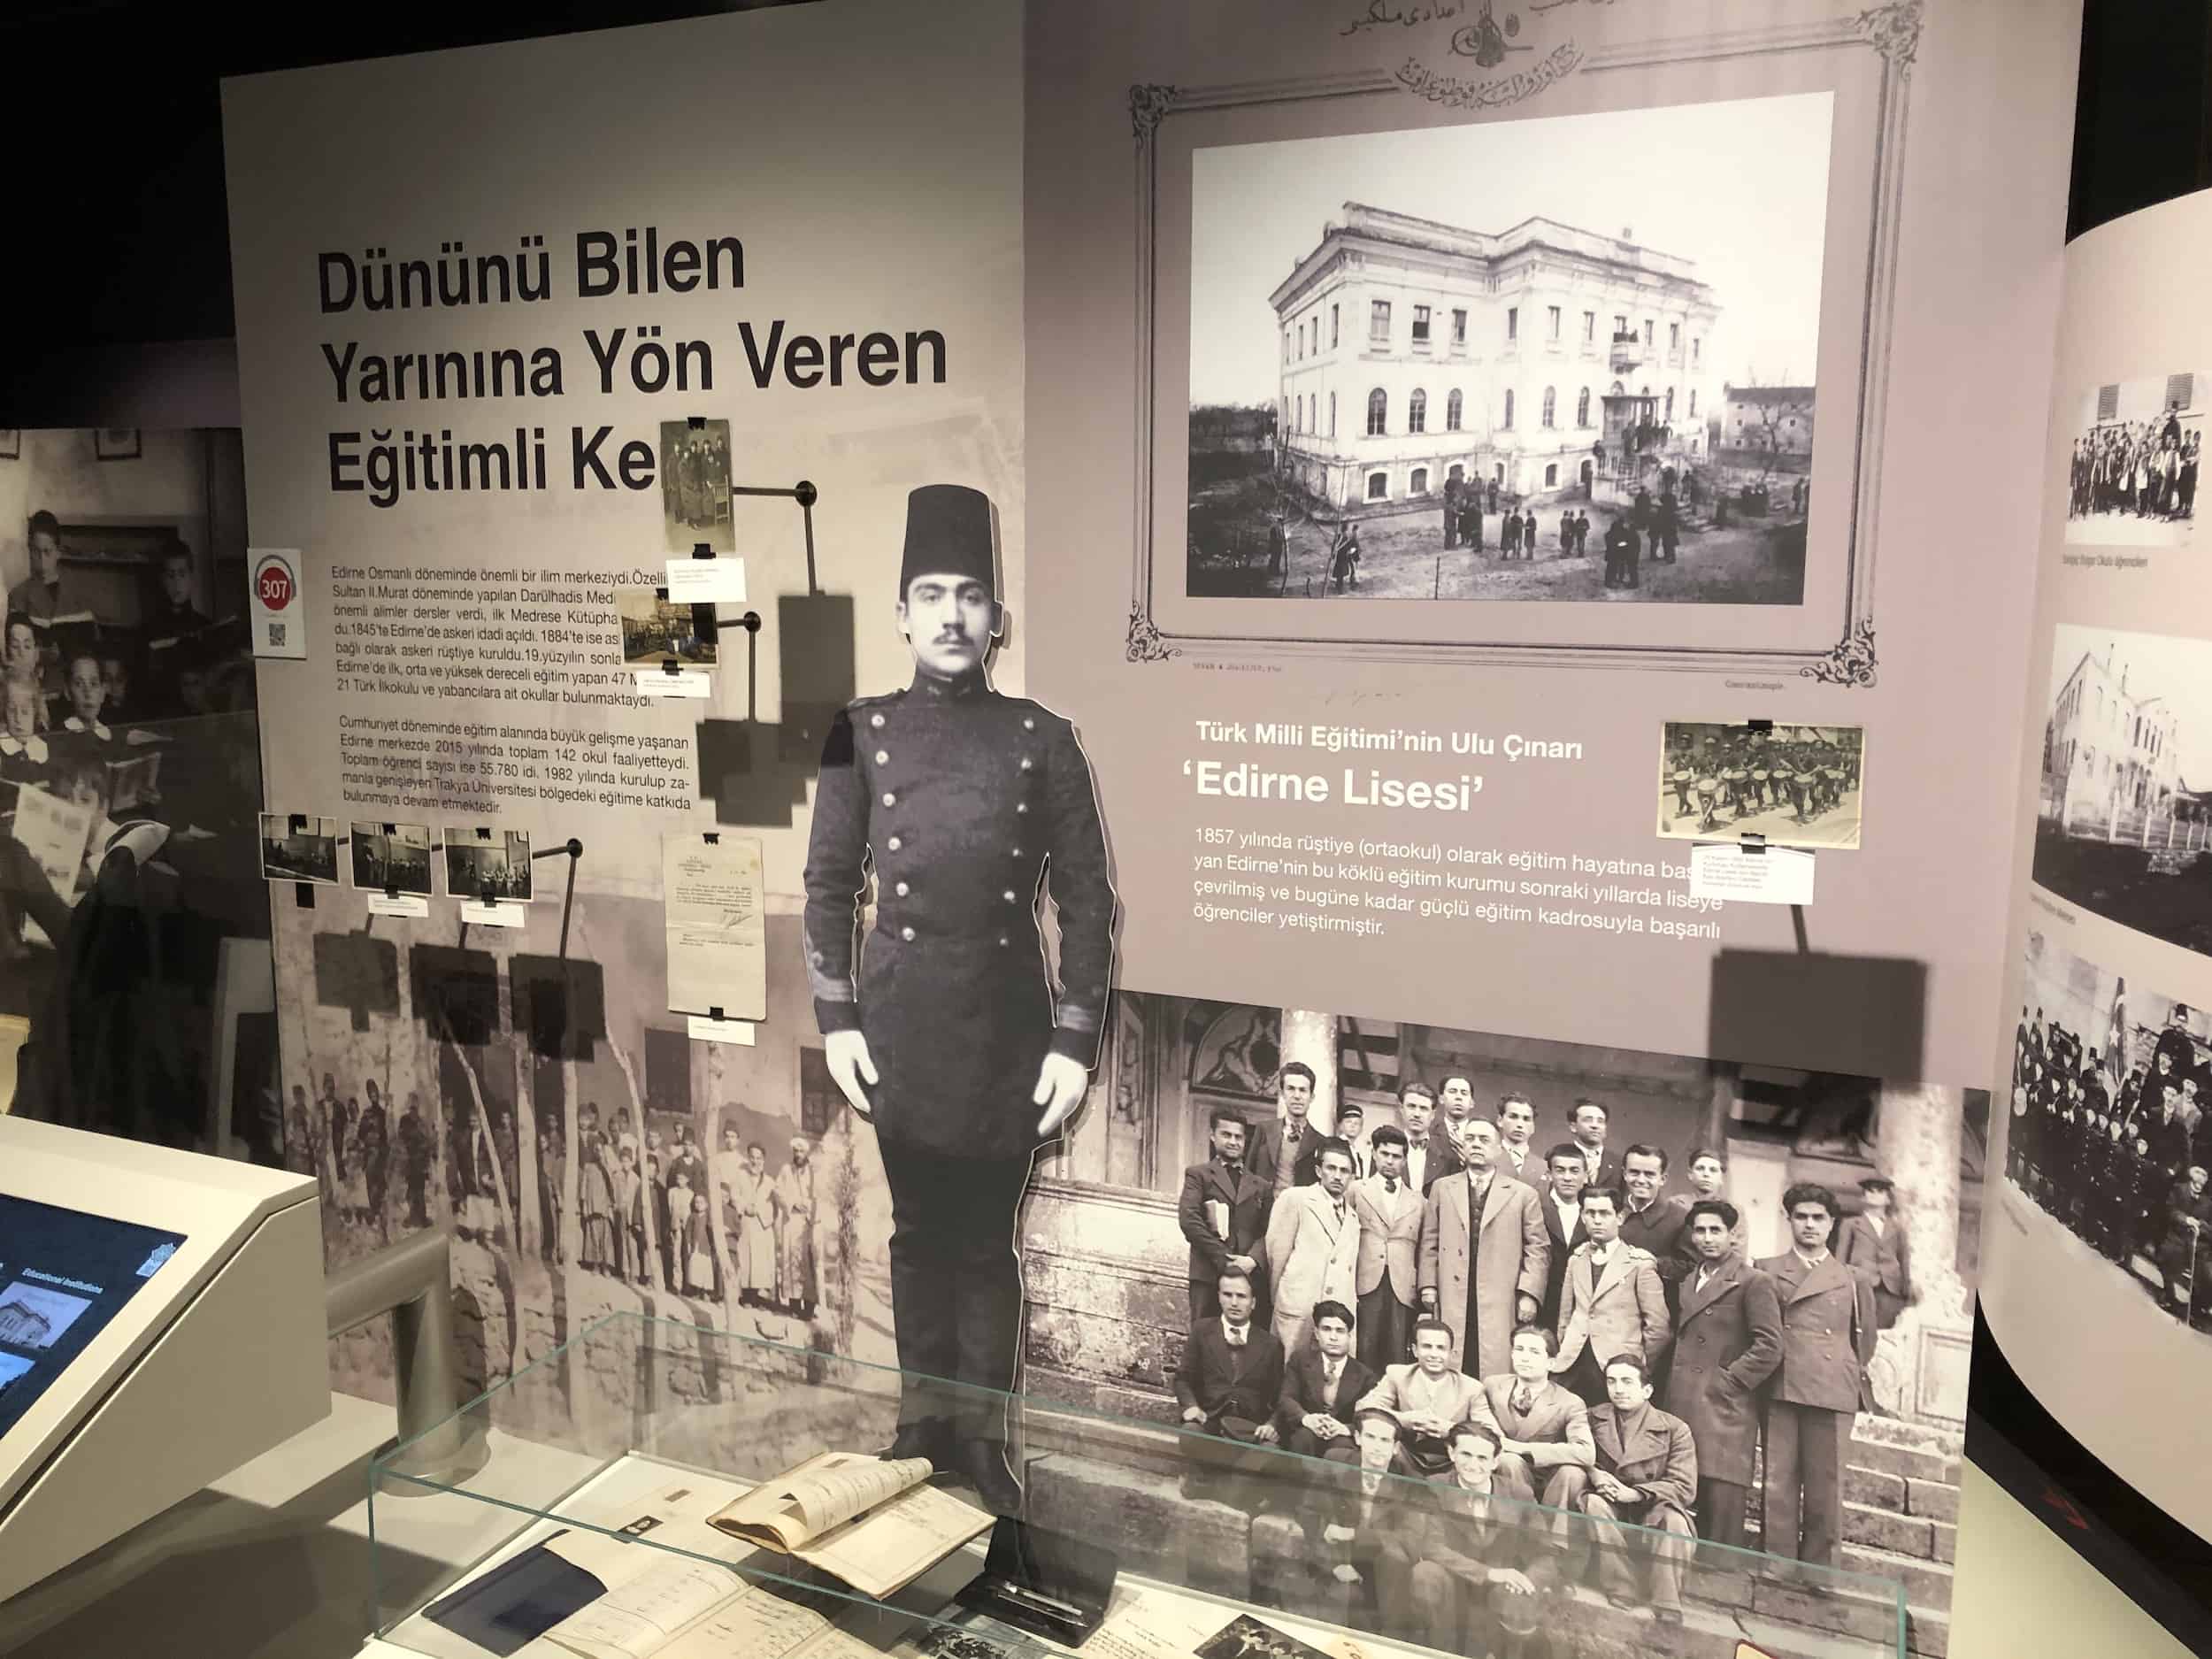 Education at the Edirne City Museum in Edirne, Turkey